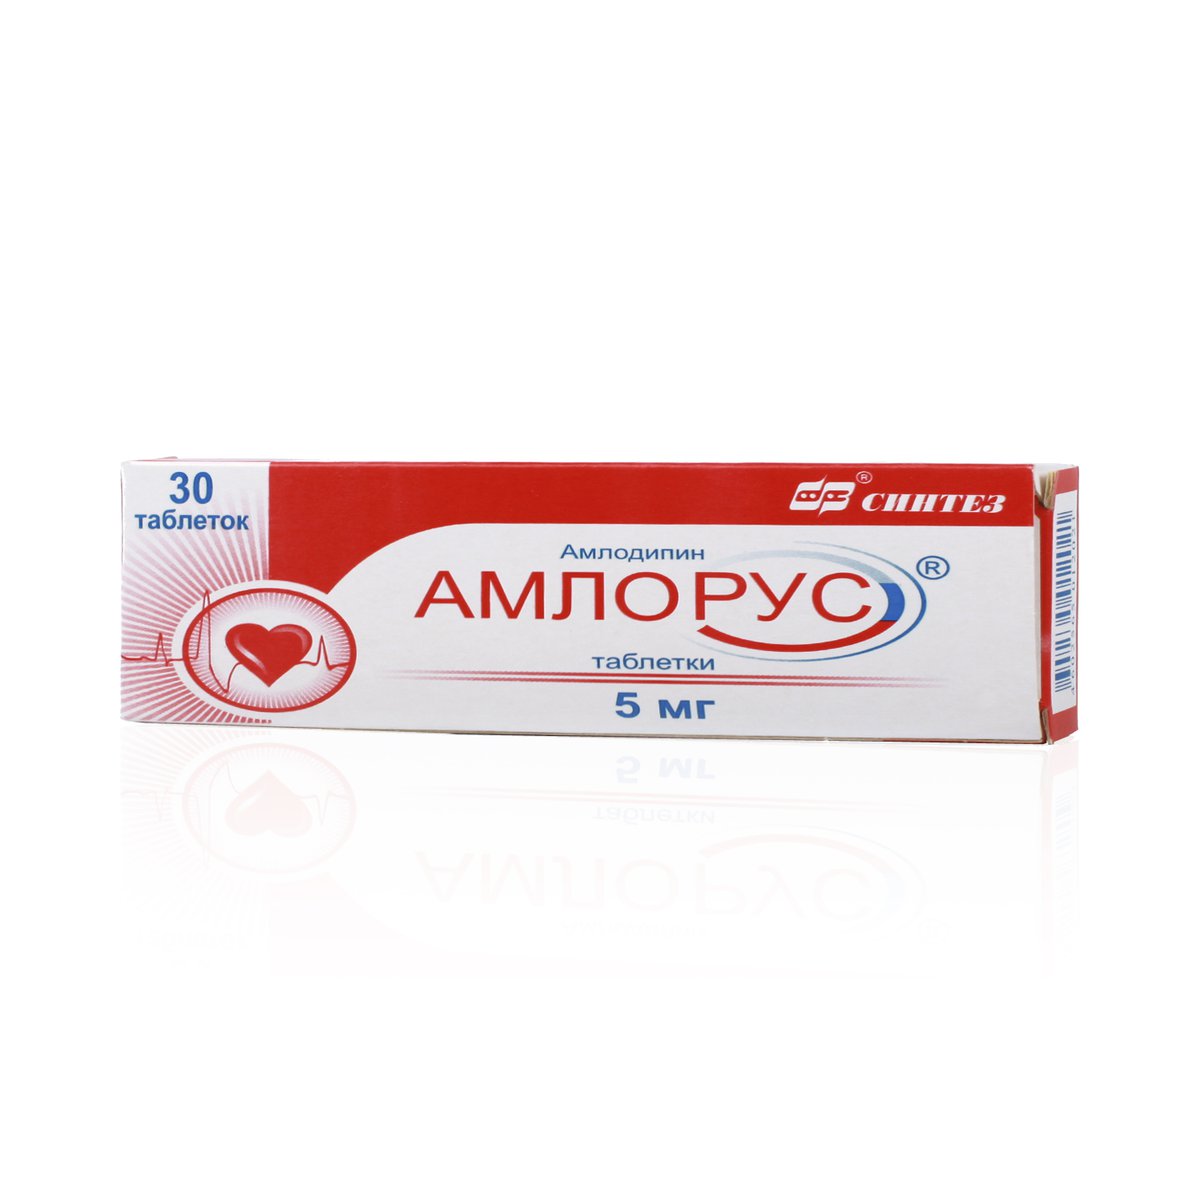 Амлорус (таблетки, 30 шт, 5 мг) - цена,  онлайн  .